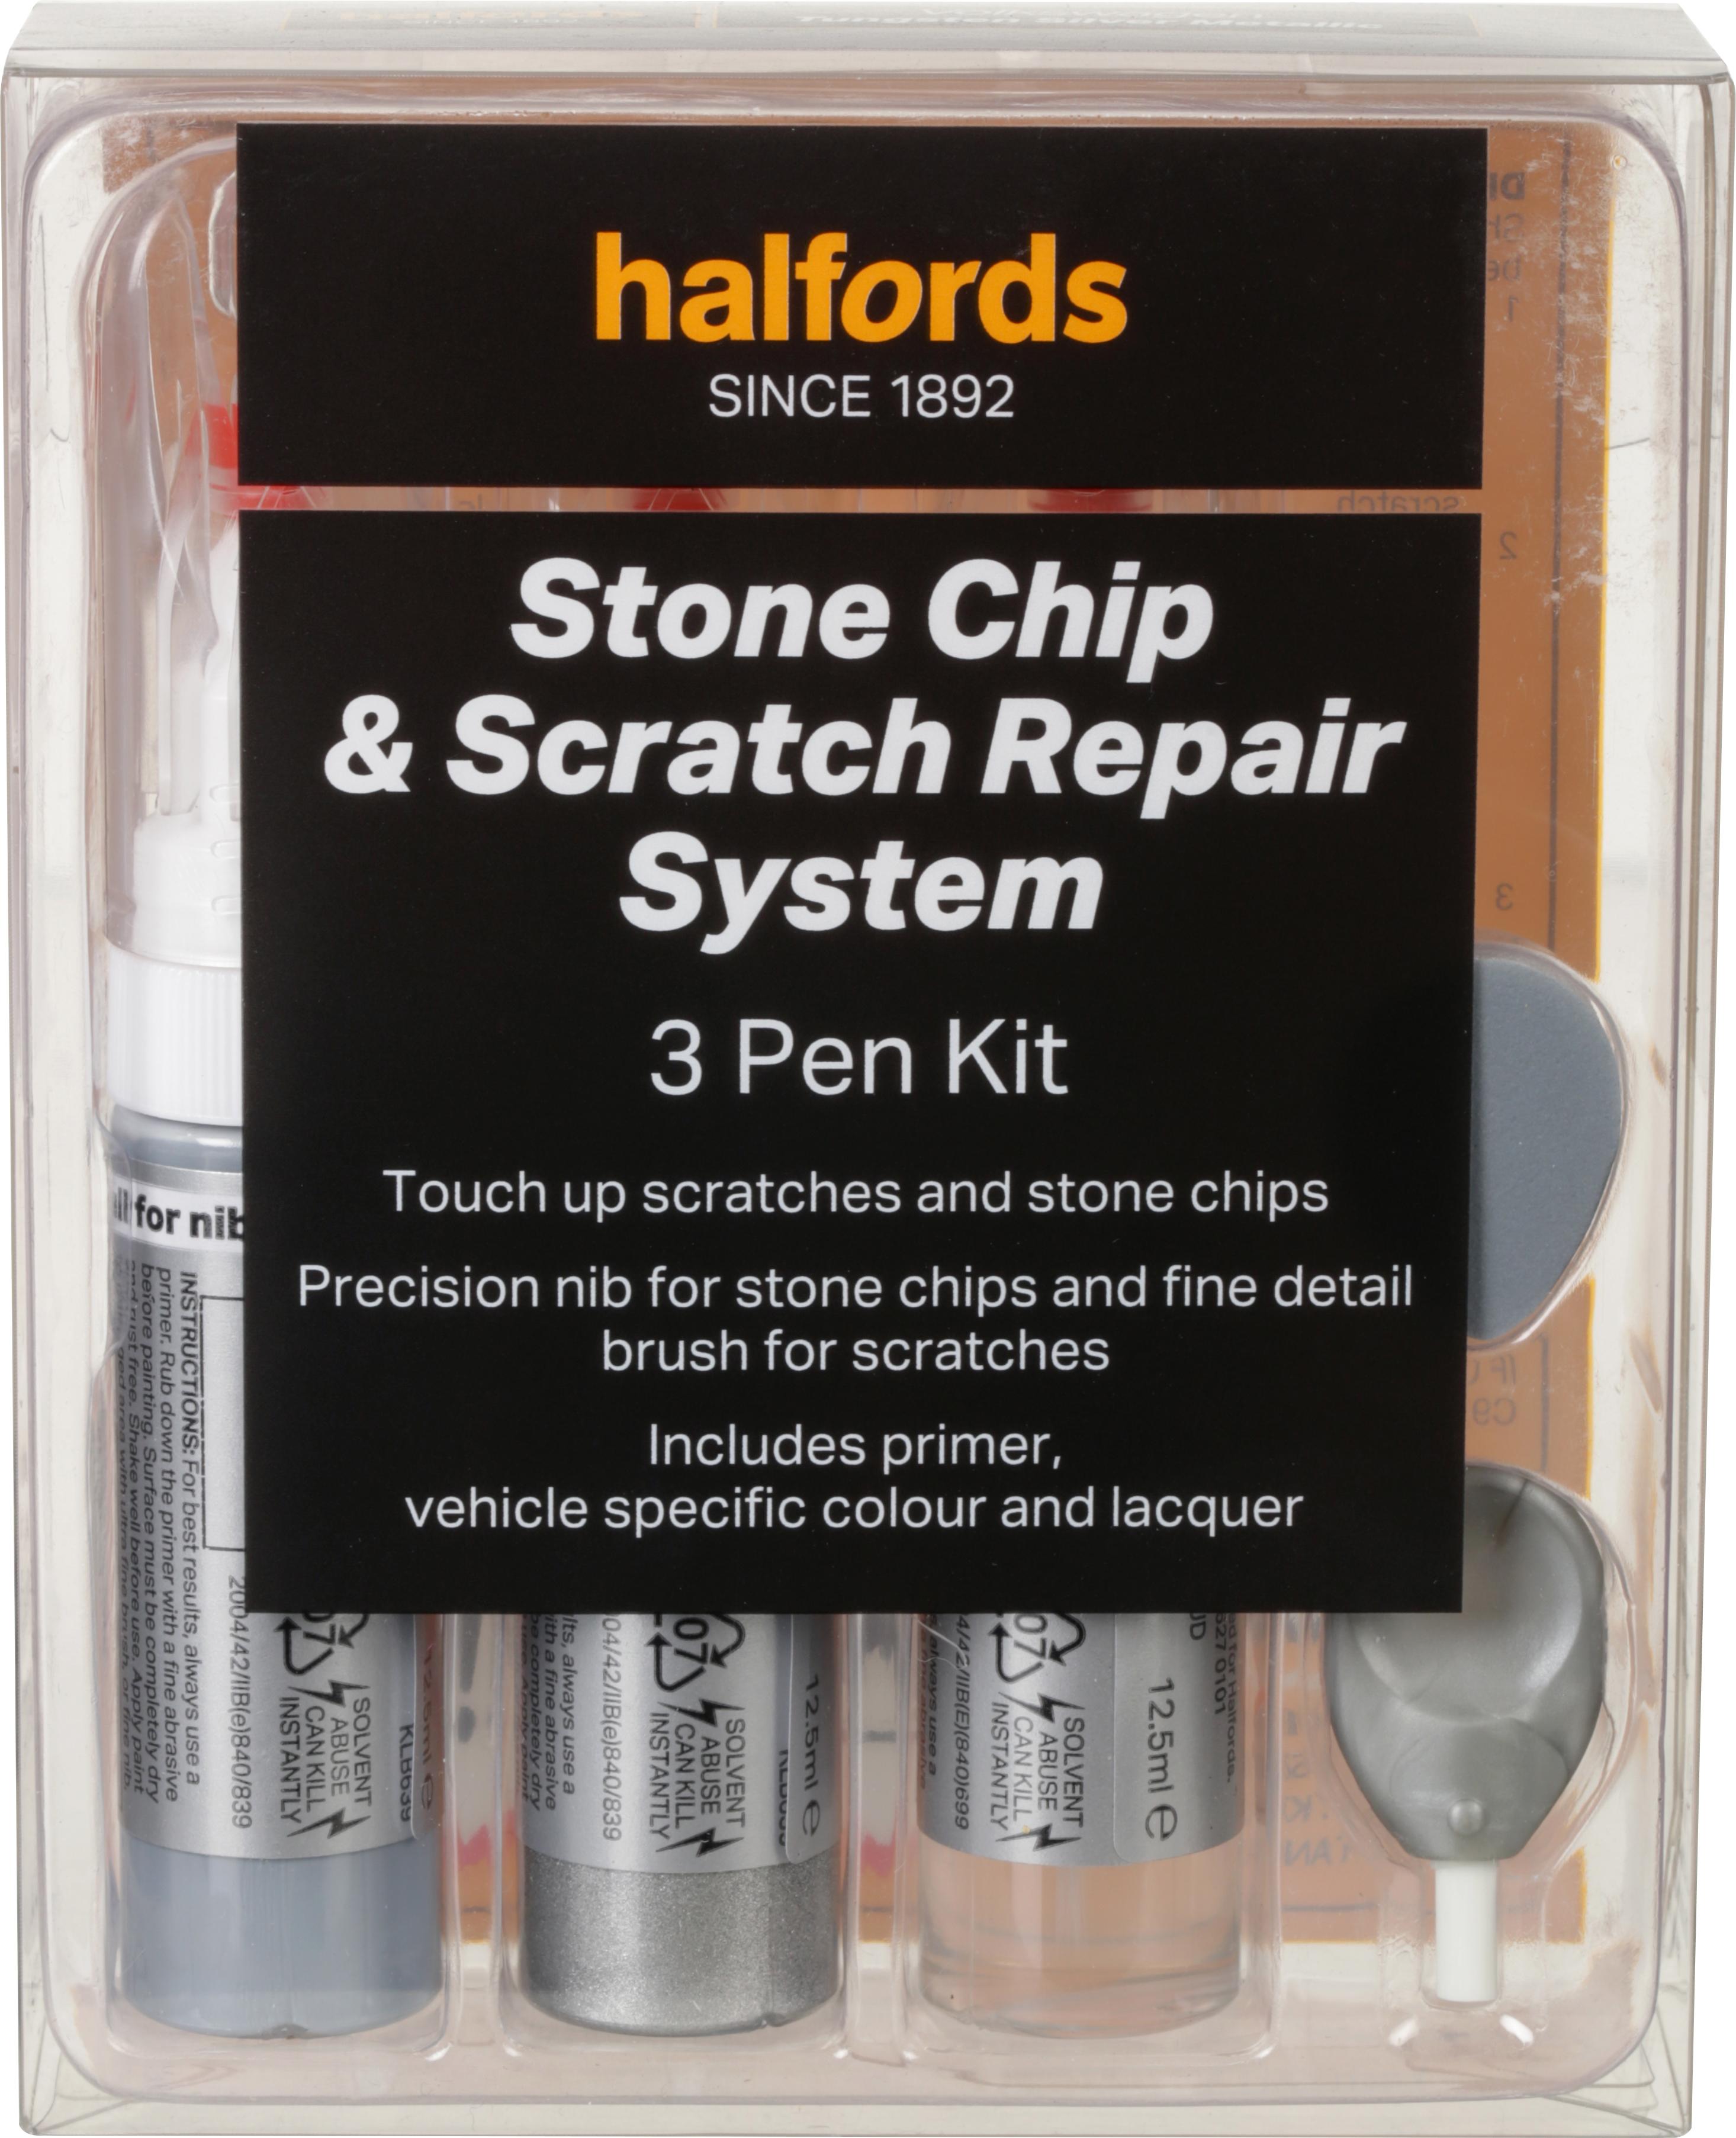 Halfords Vw Tungsten Silver Scratch & Chip Repair Kit